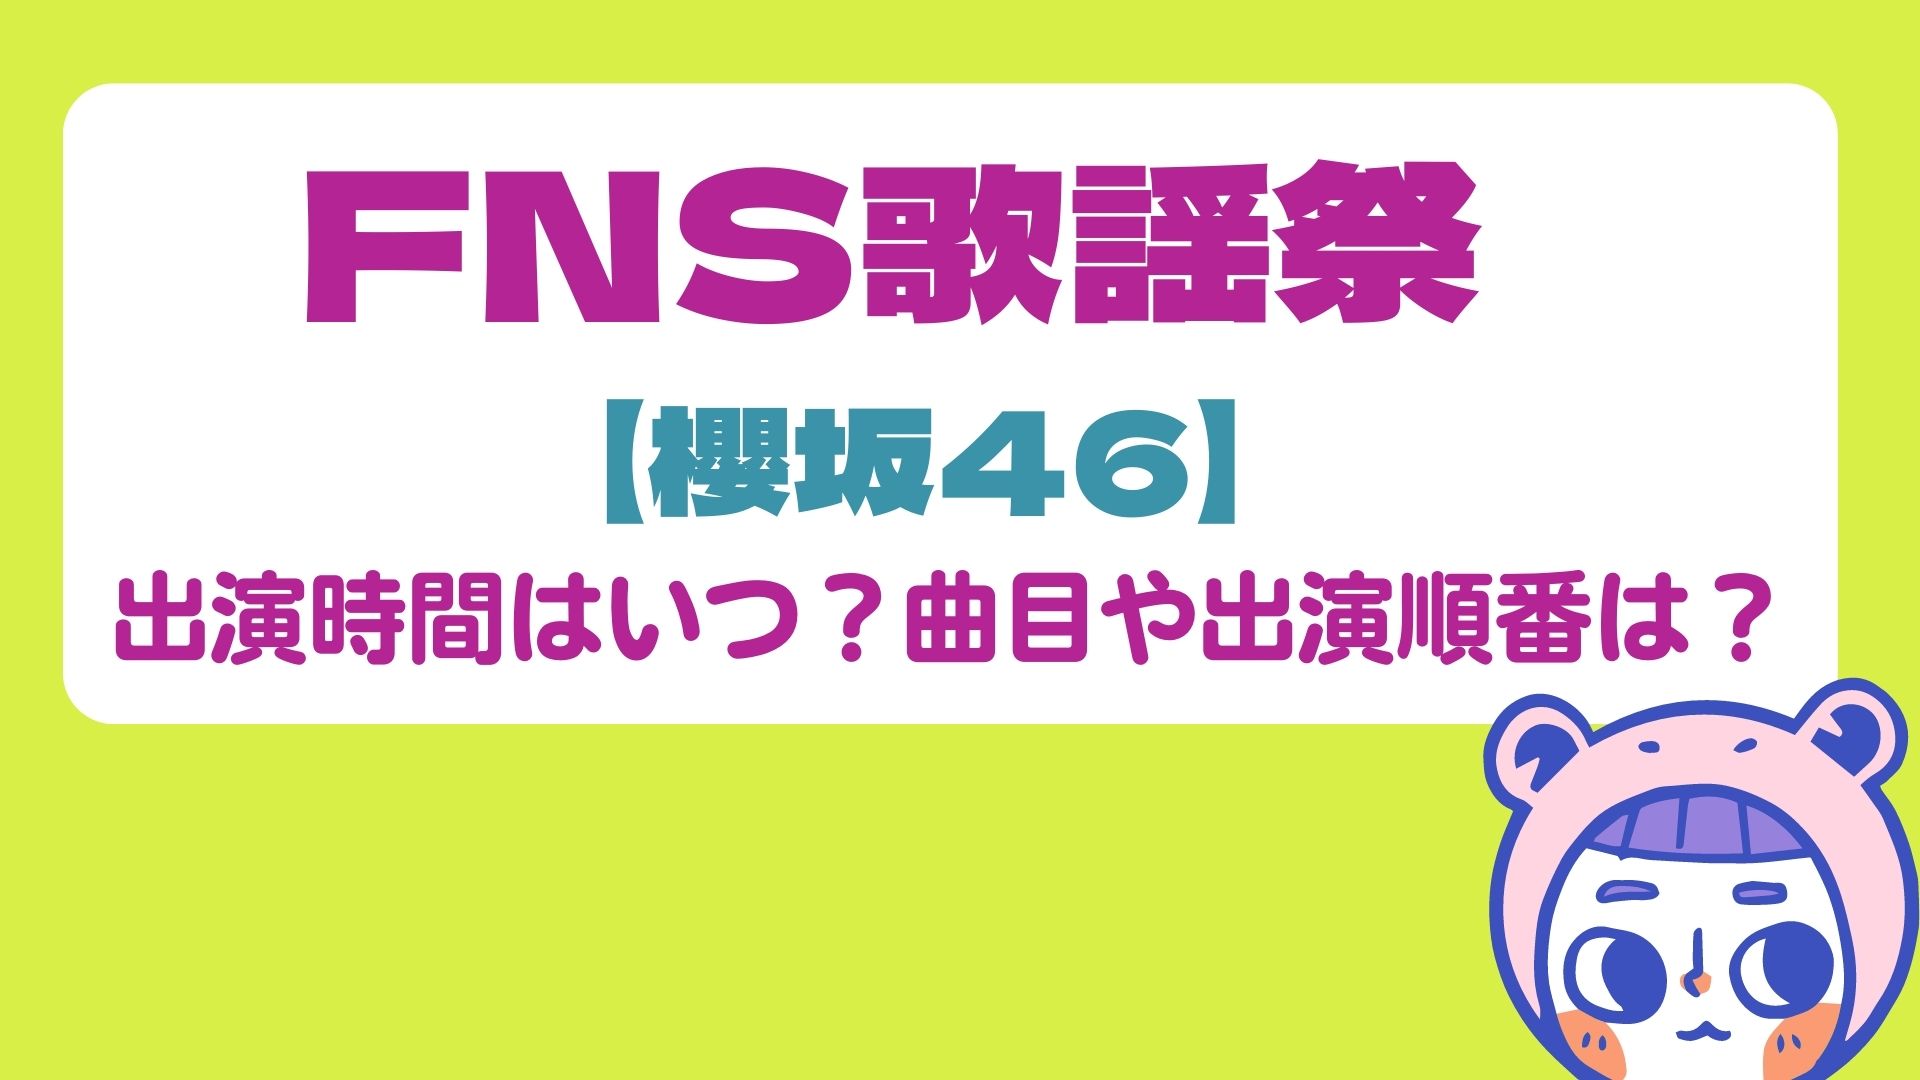 FNS歌謡祭櫻坂46出演時間